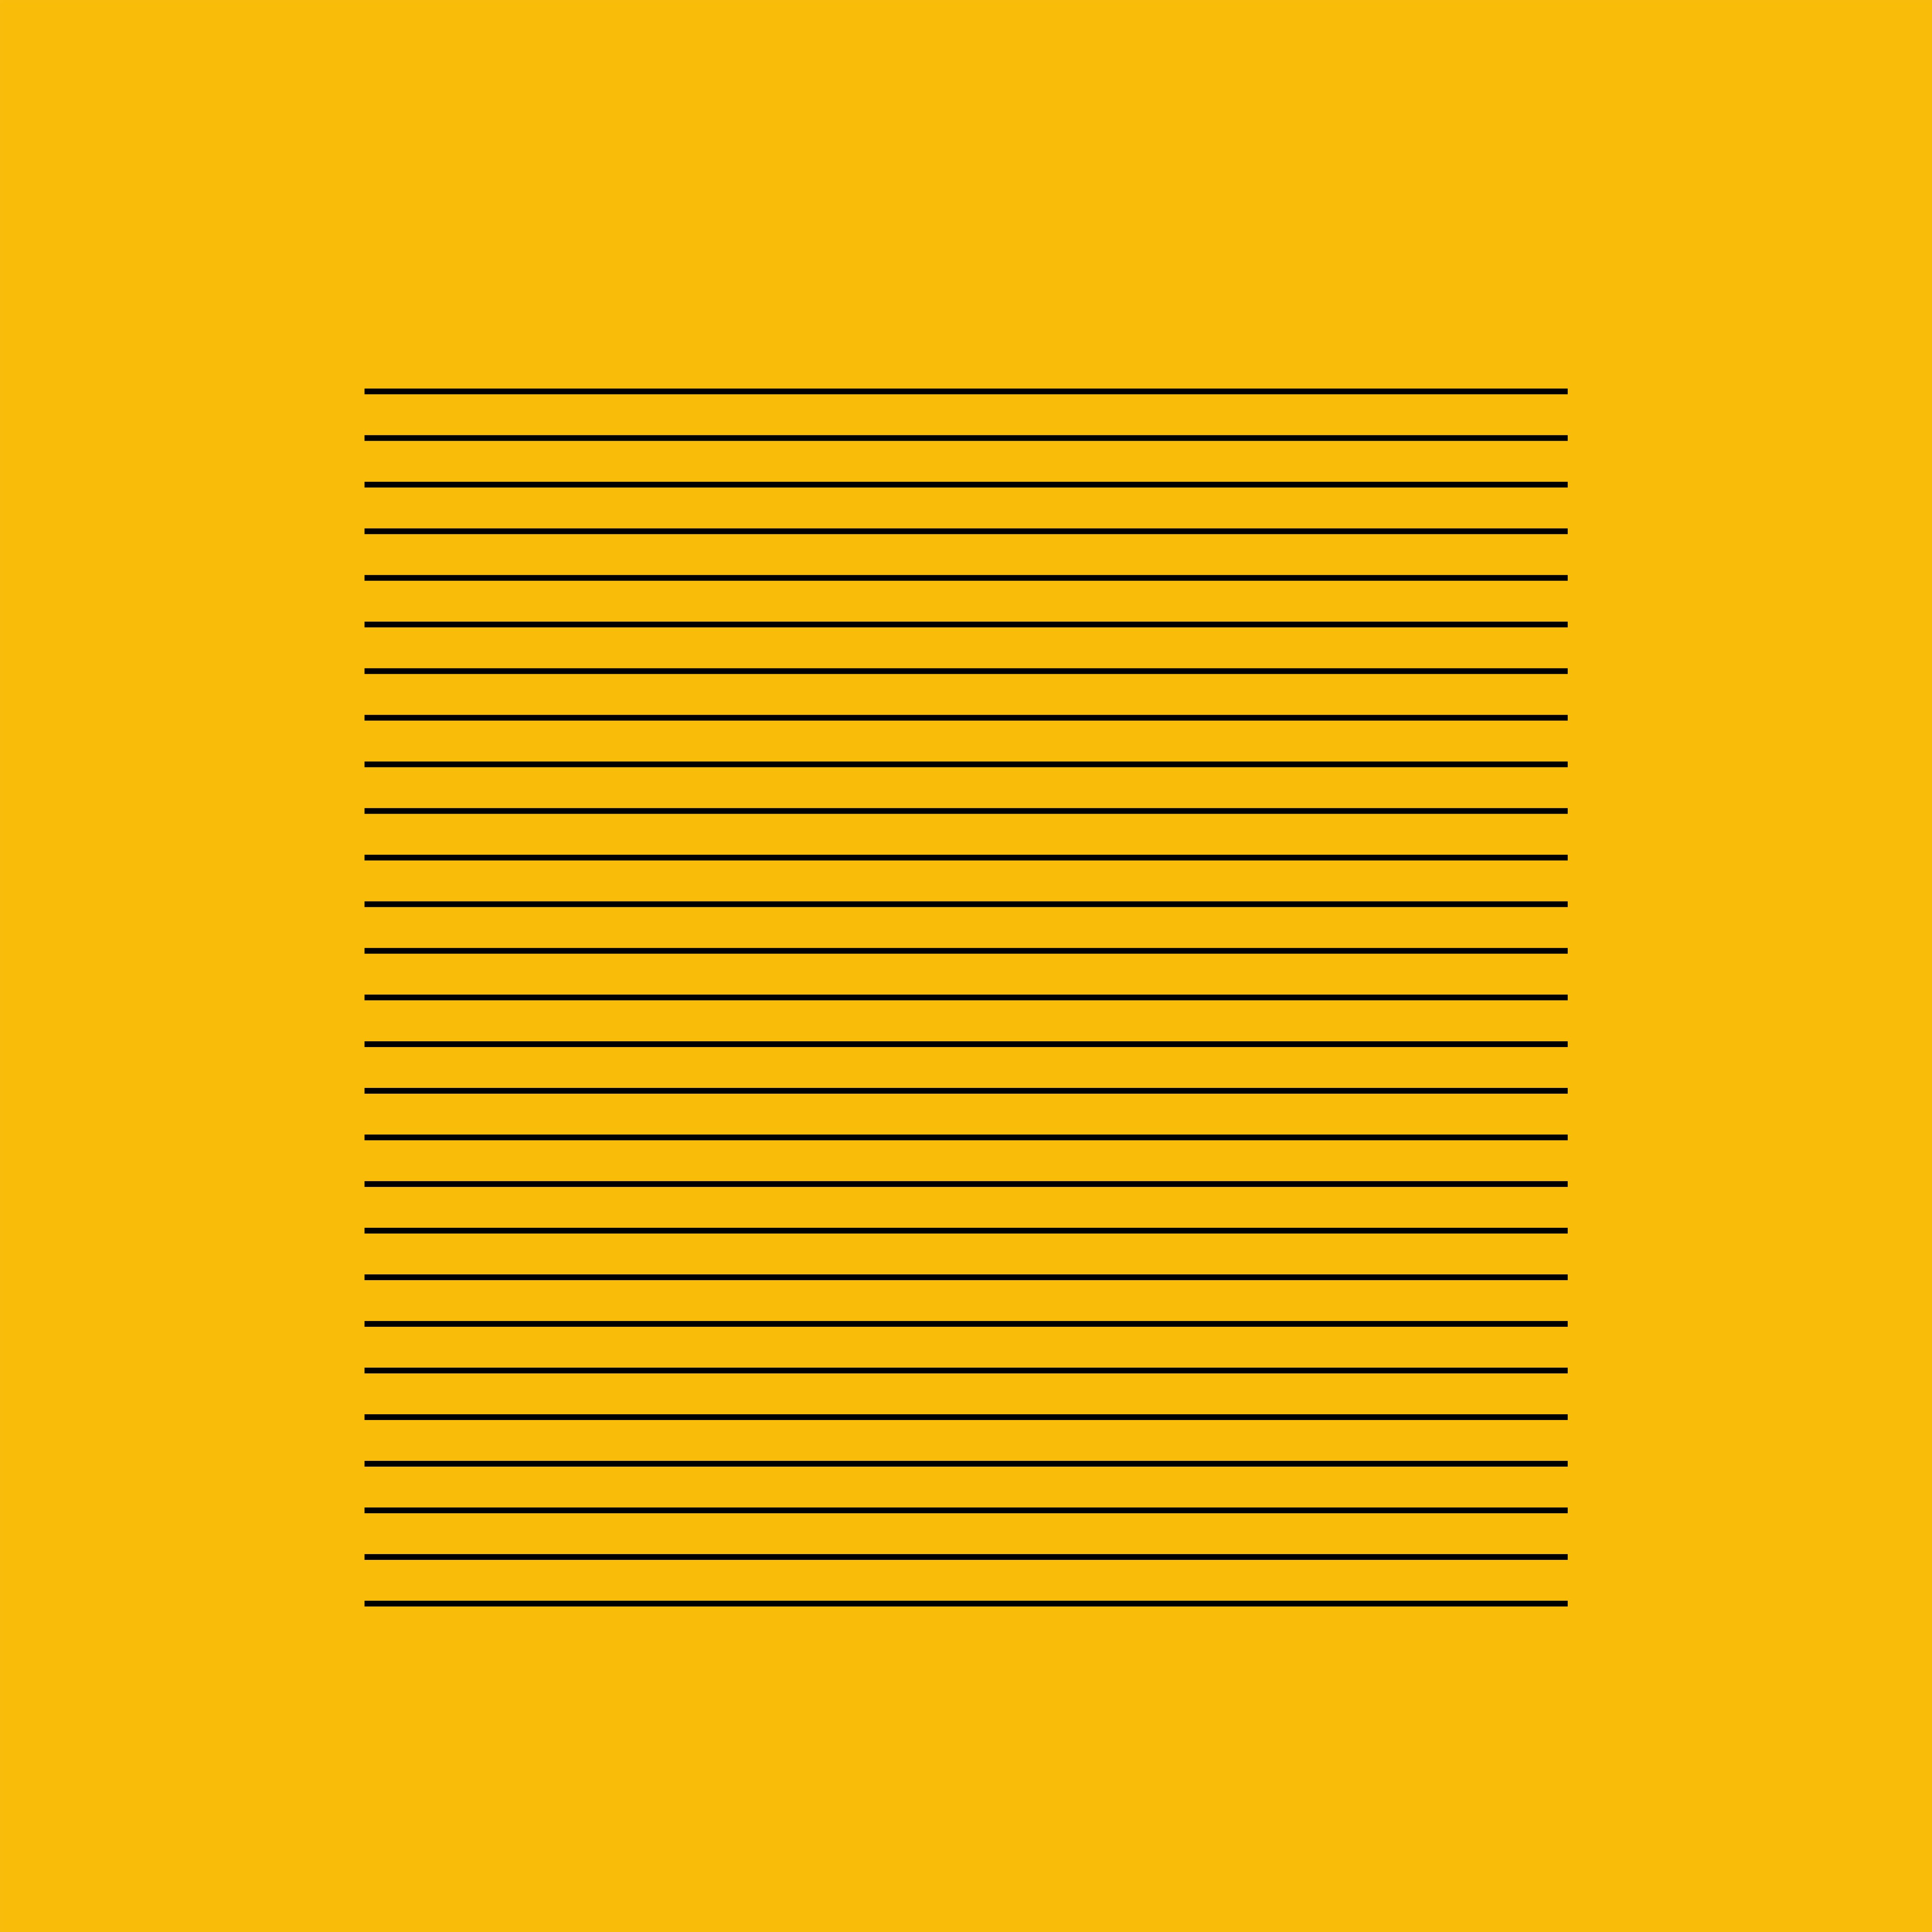 parallel horizontal lines